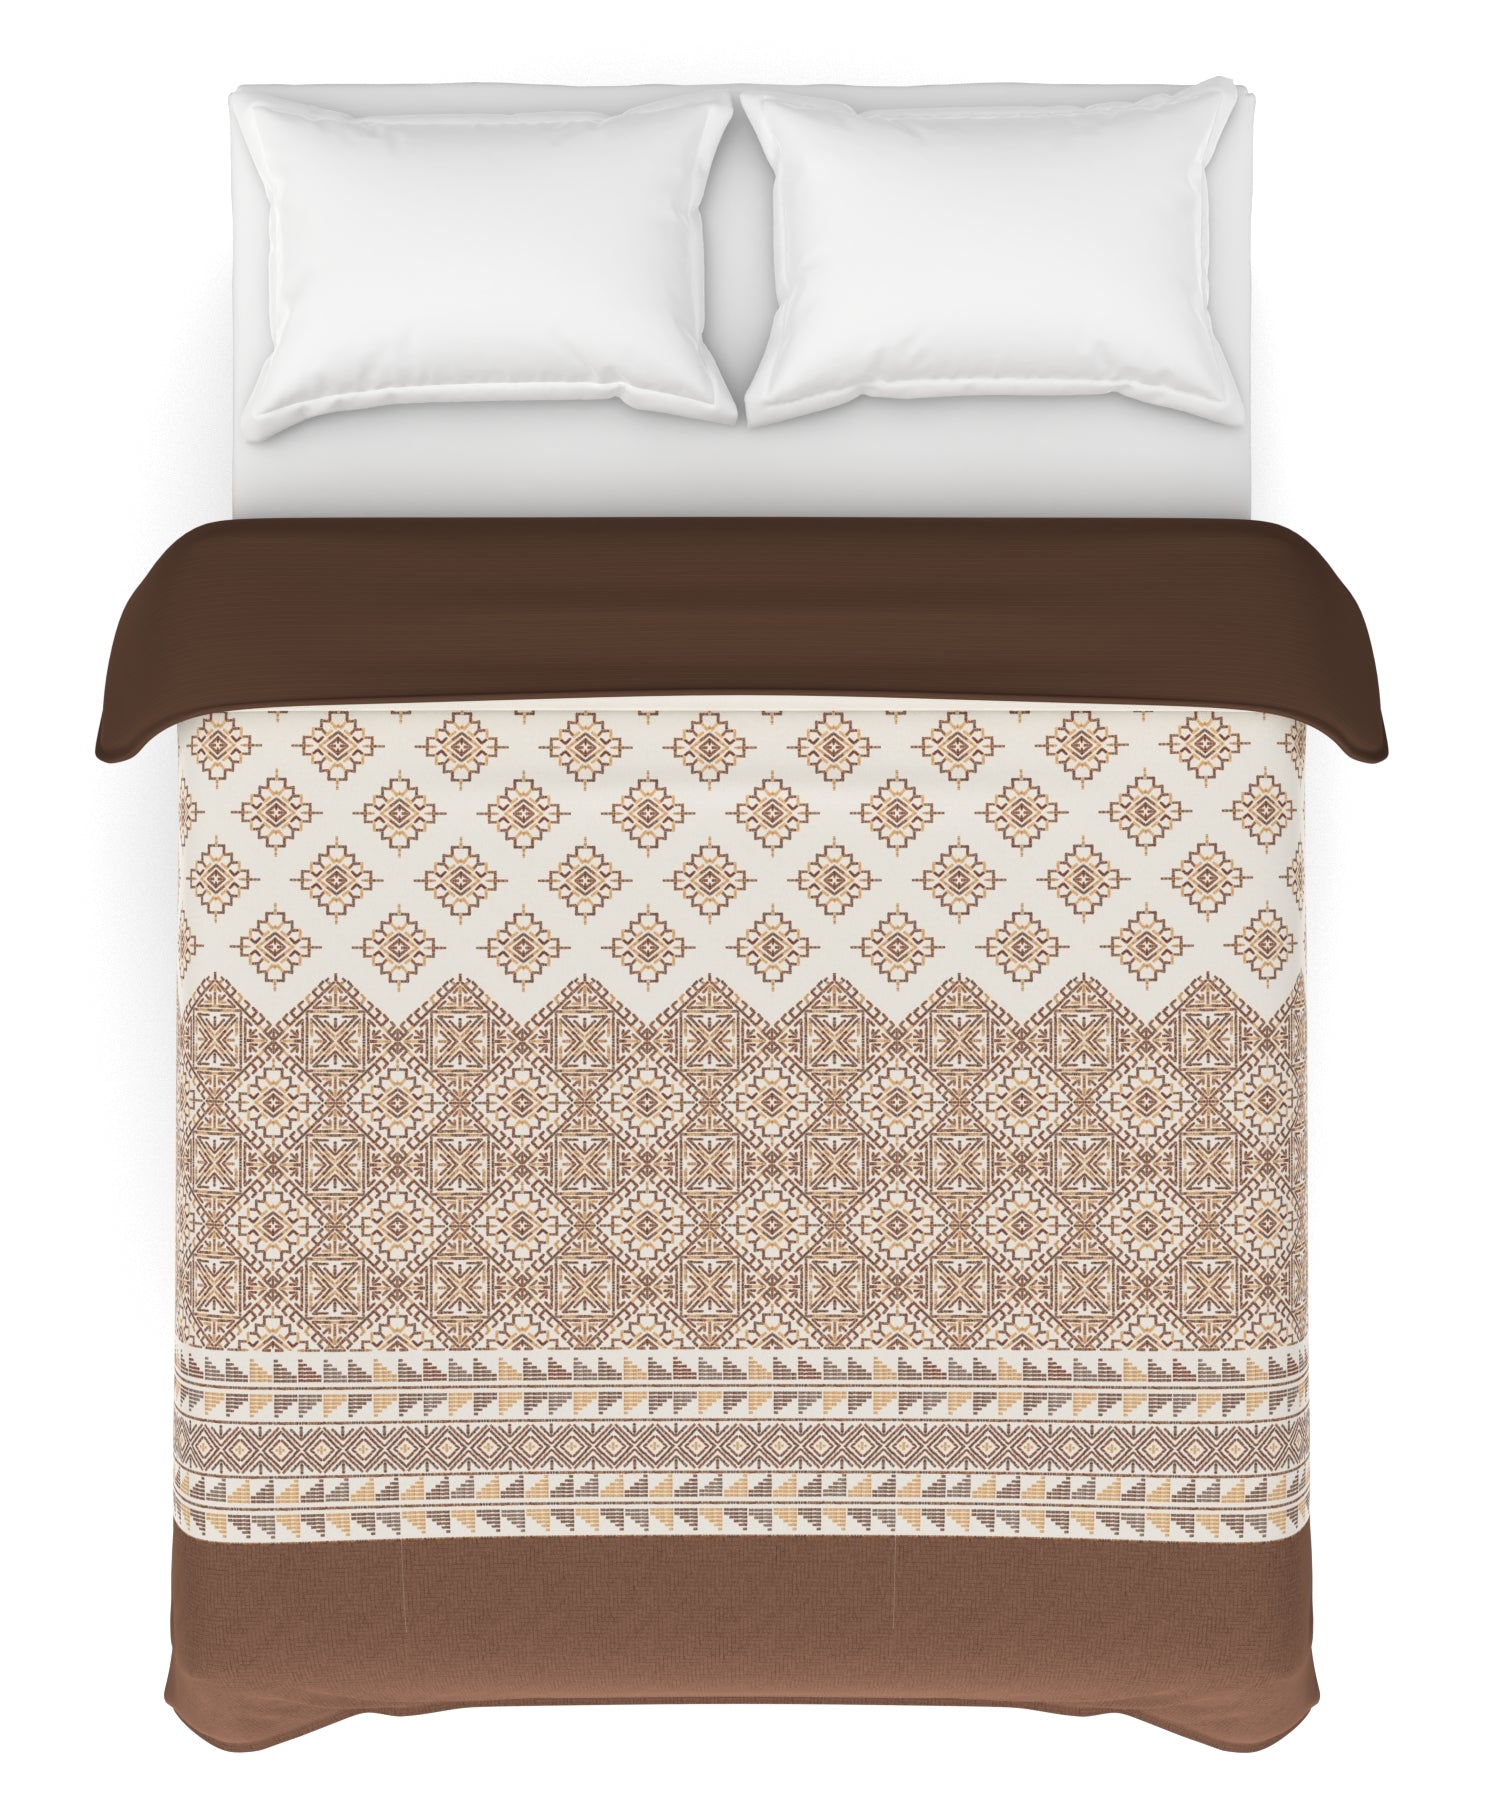 King Size Comforter ₹3599/-